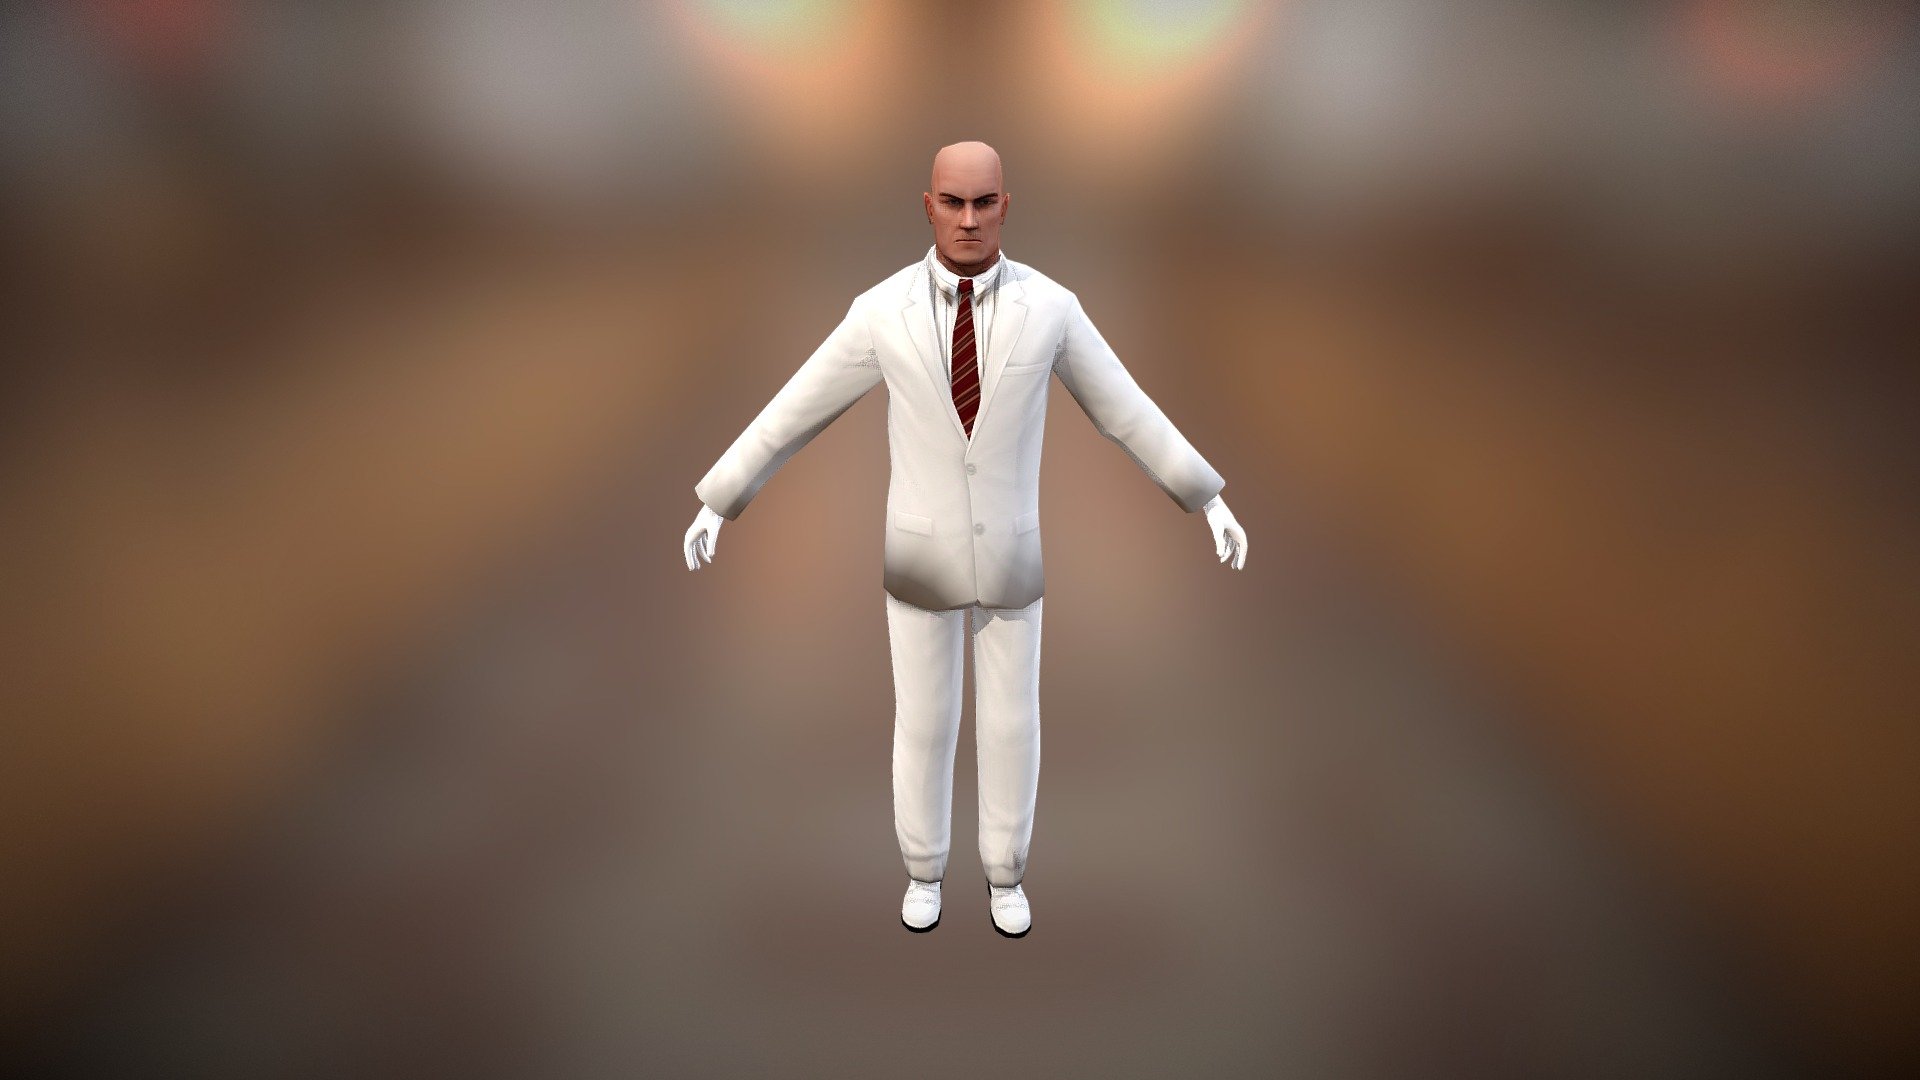 Hitman realistic suit and head [Hitman: Blood Money] [Mods]